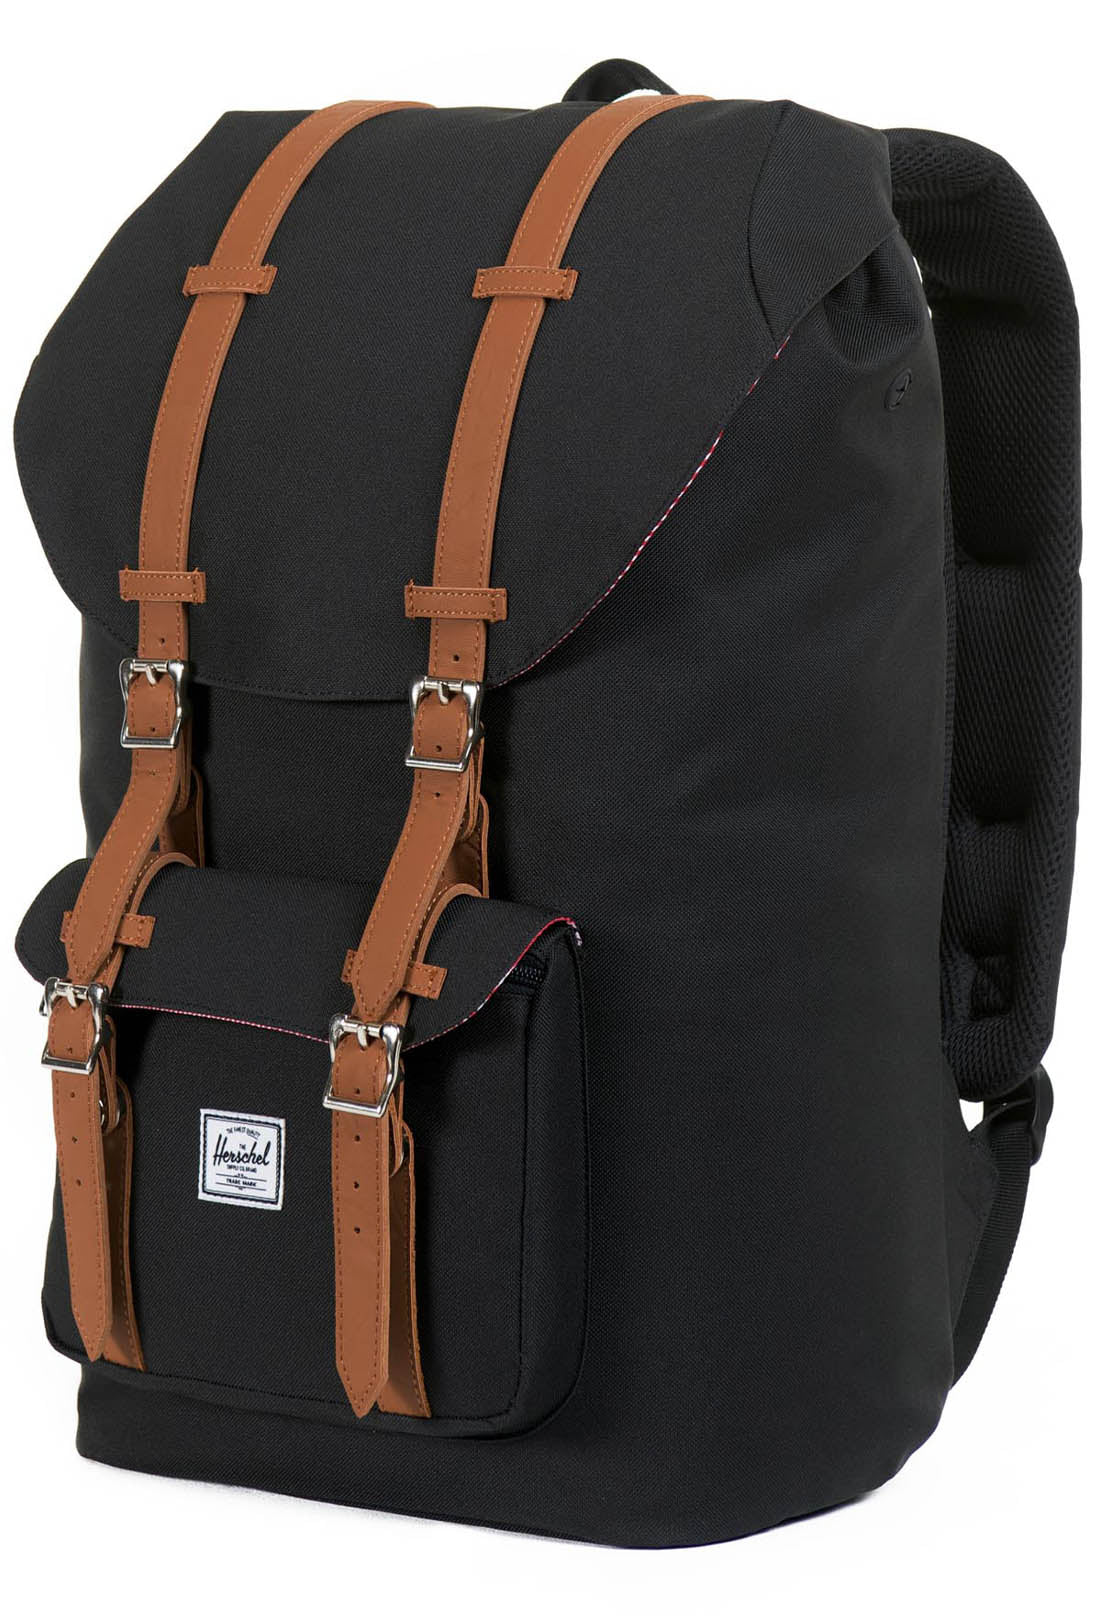 Herschel Little America Backpack - Black / Tan Synthetic Leather